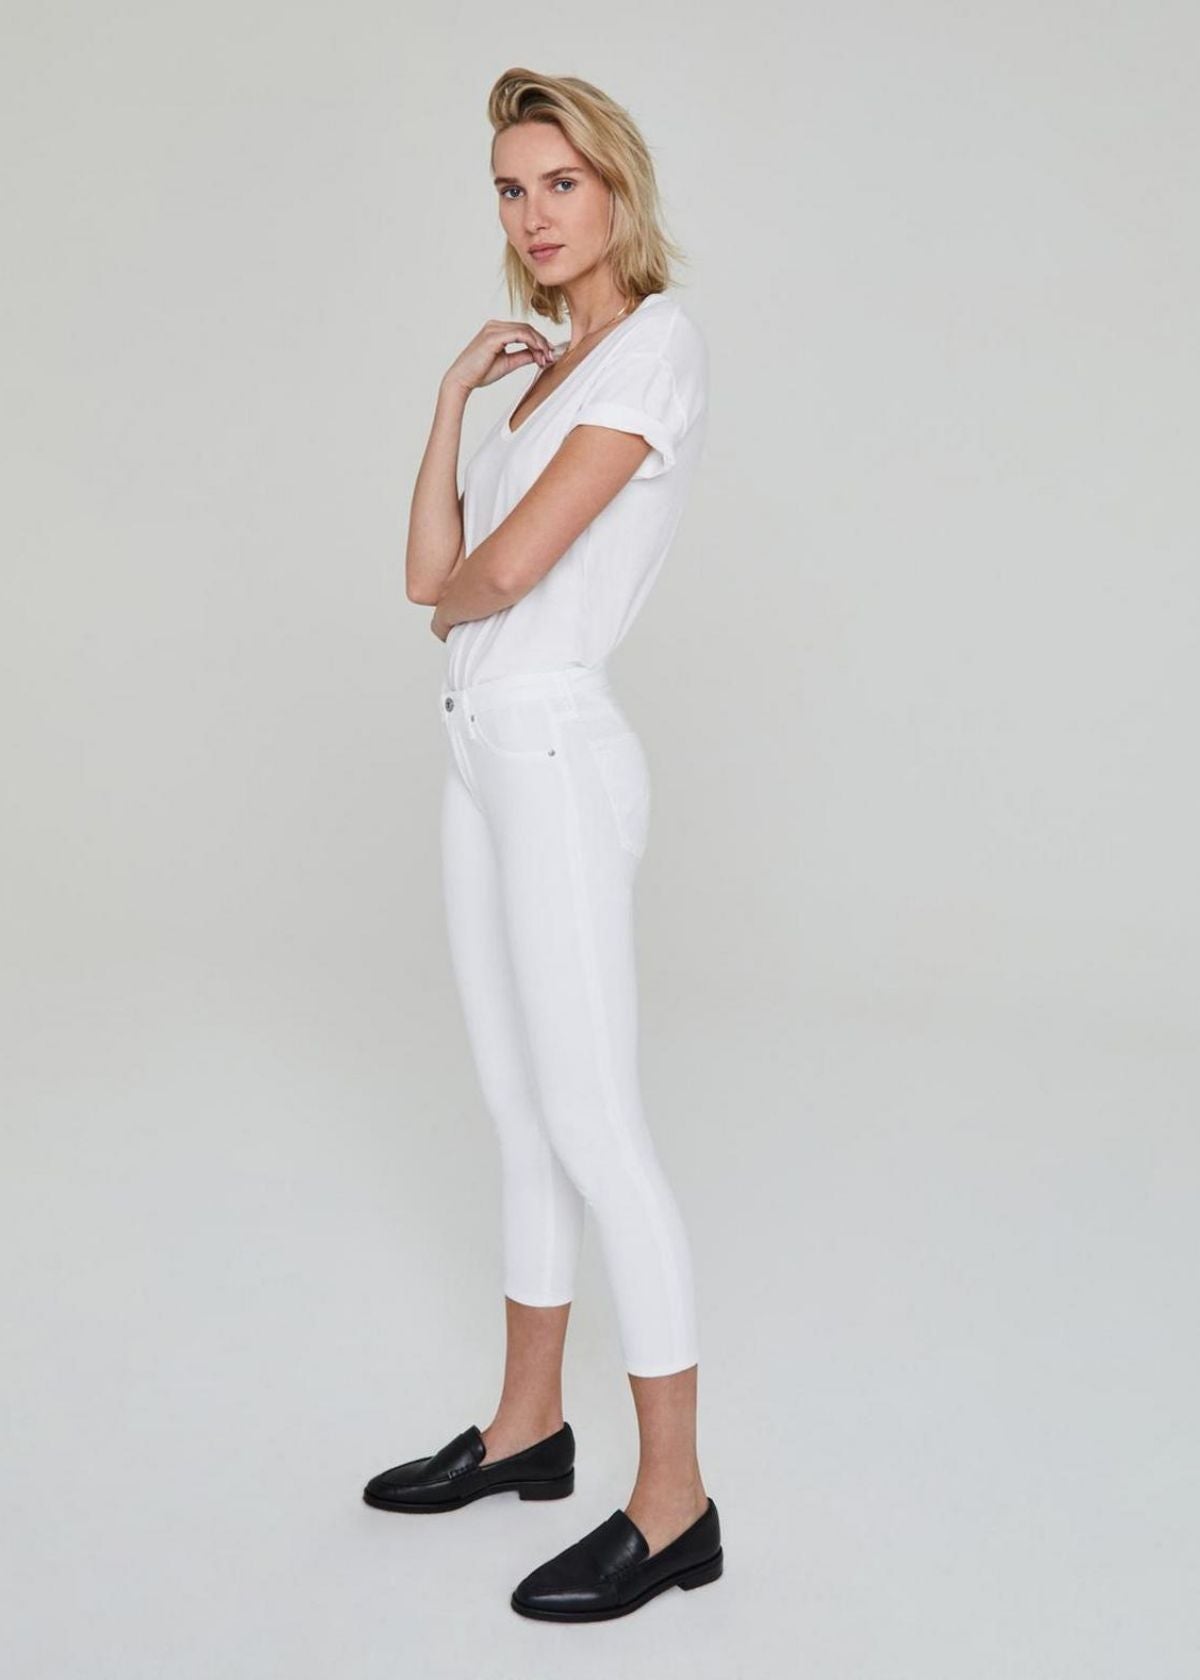 AG Prima Crop Jean in White